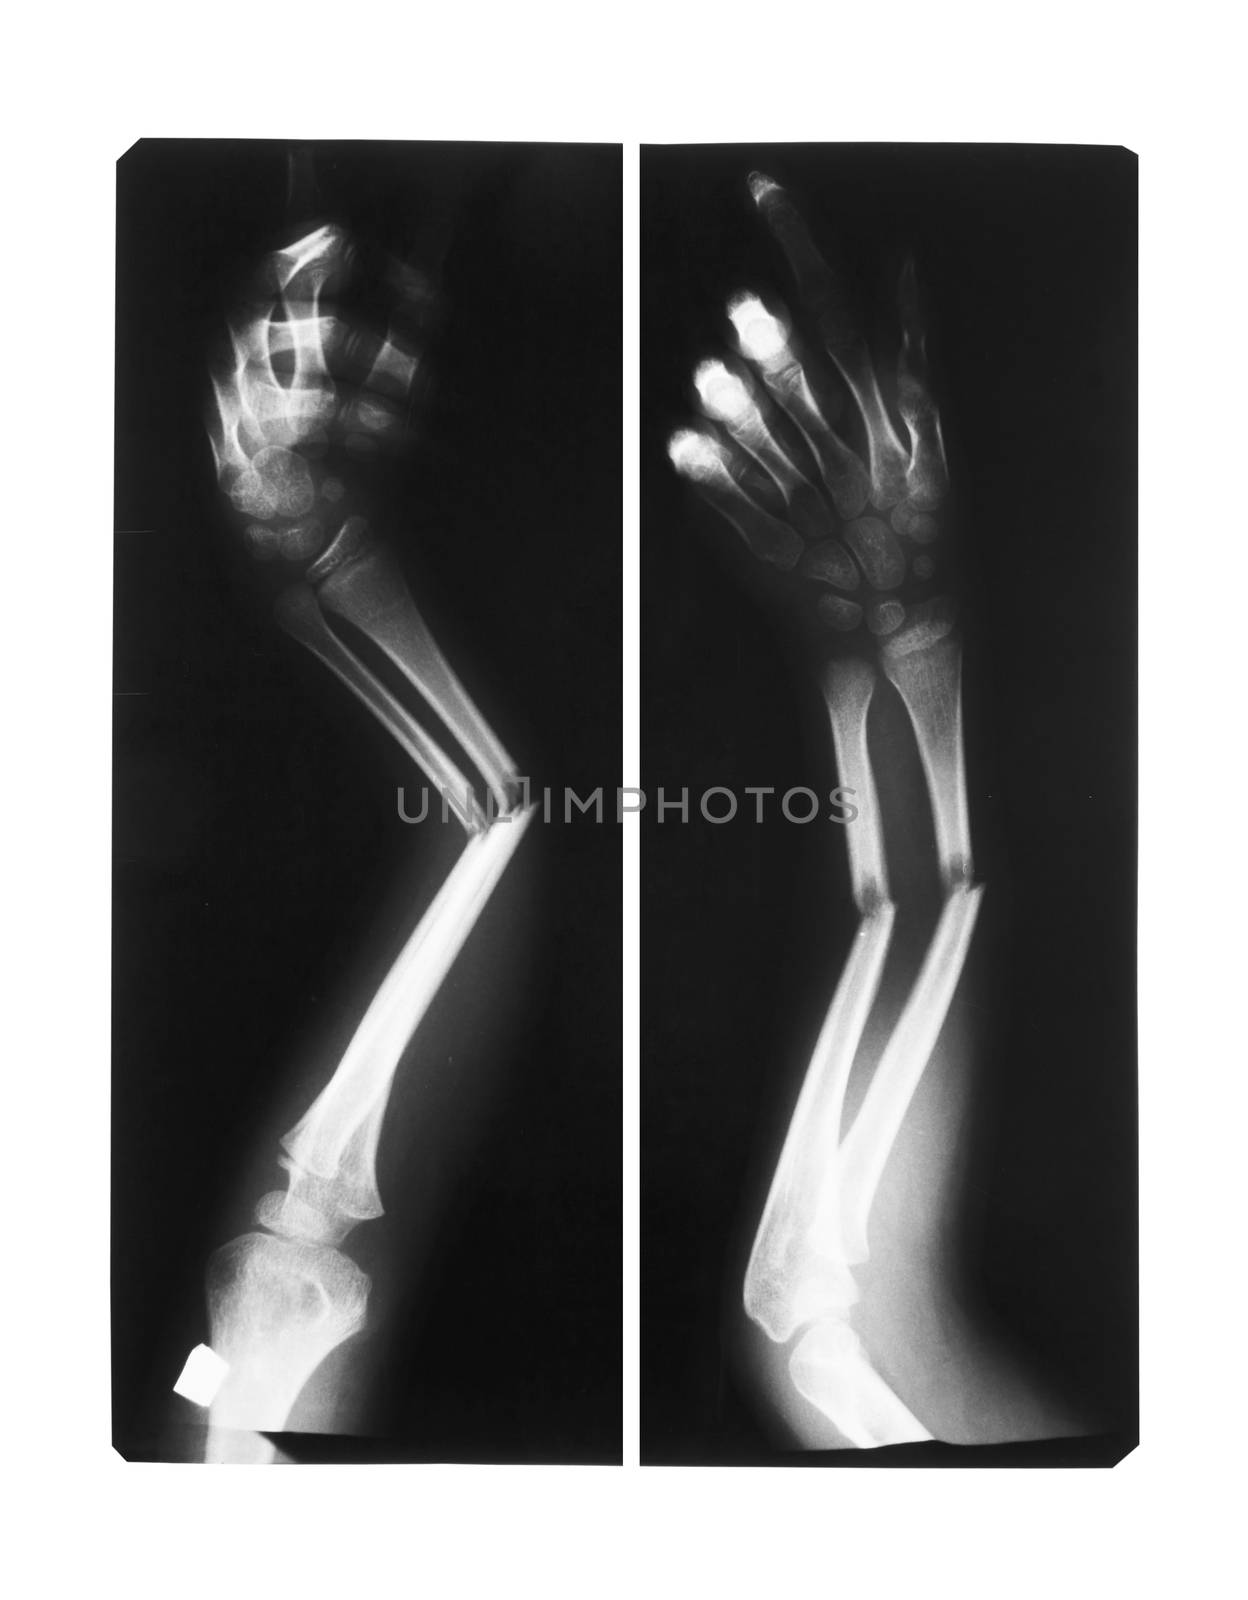 film x-ray forearm AP : show double fracture shaft of ulnarorforearm's bone